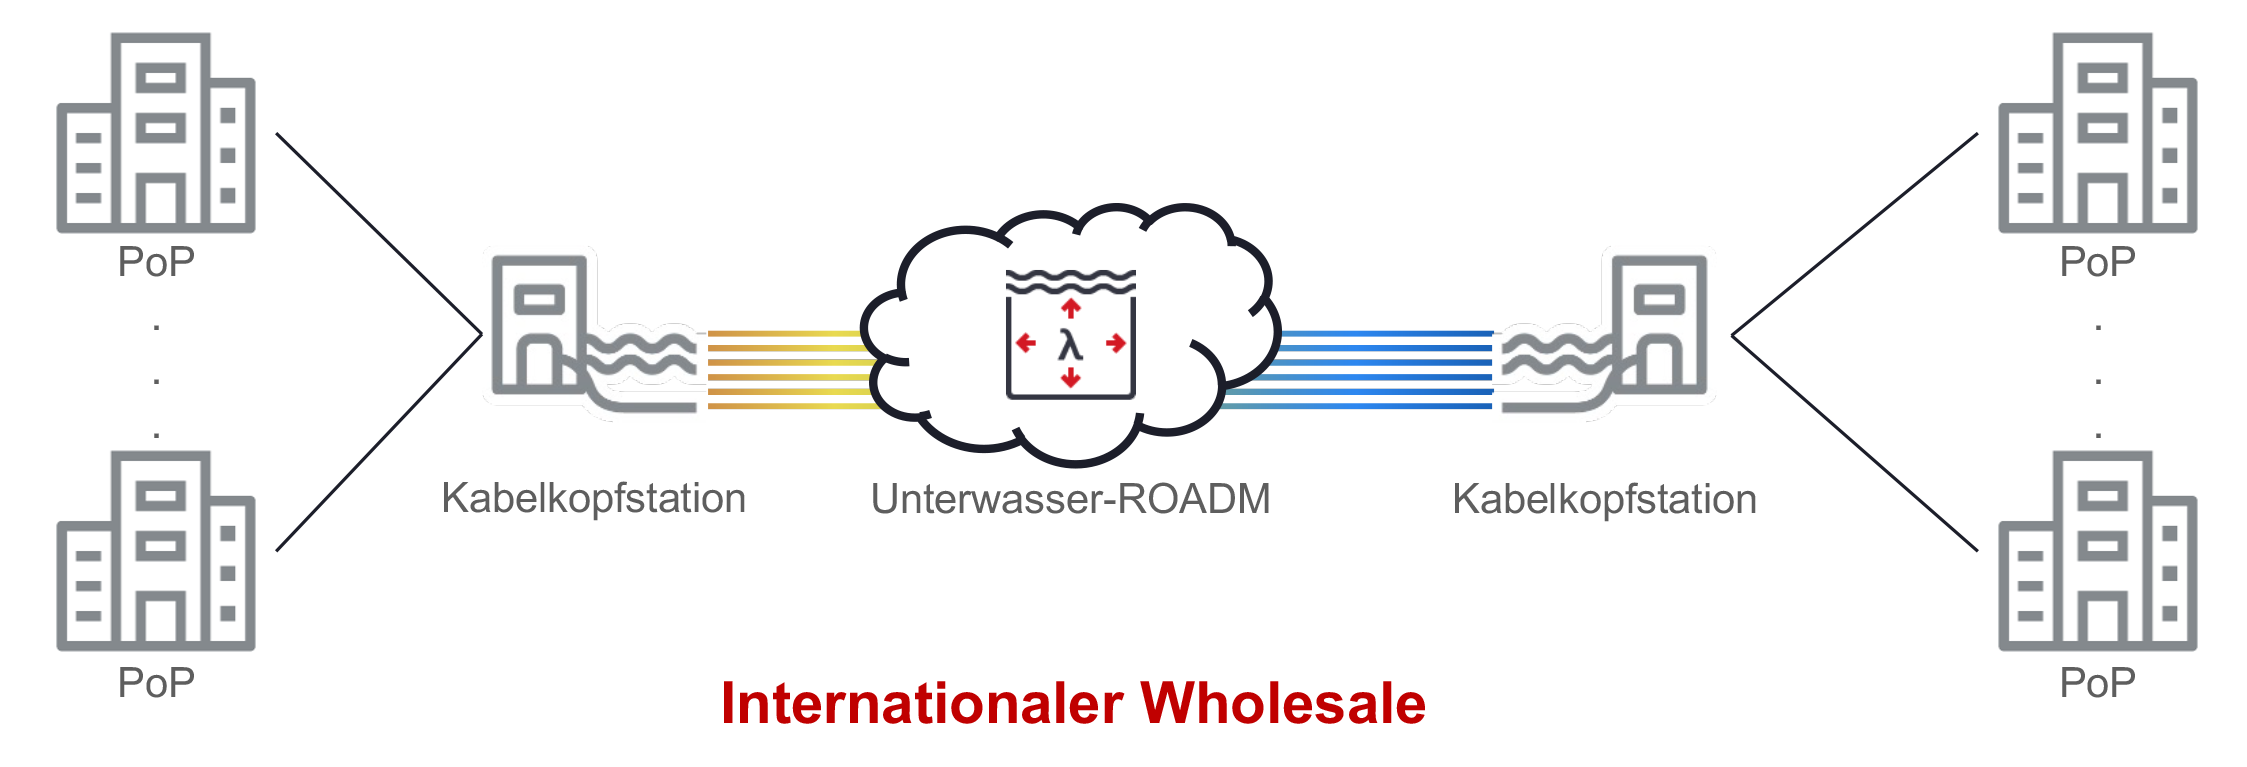 Figure 3_International Wholesaler Network Illustration